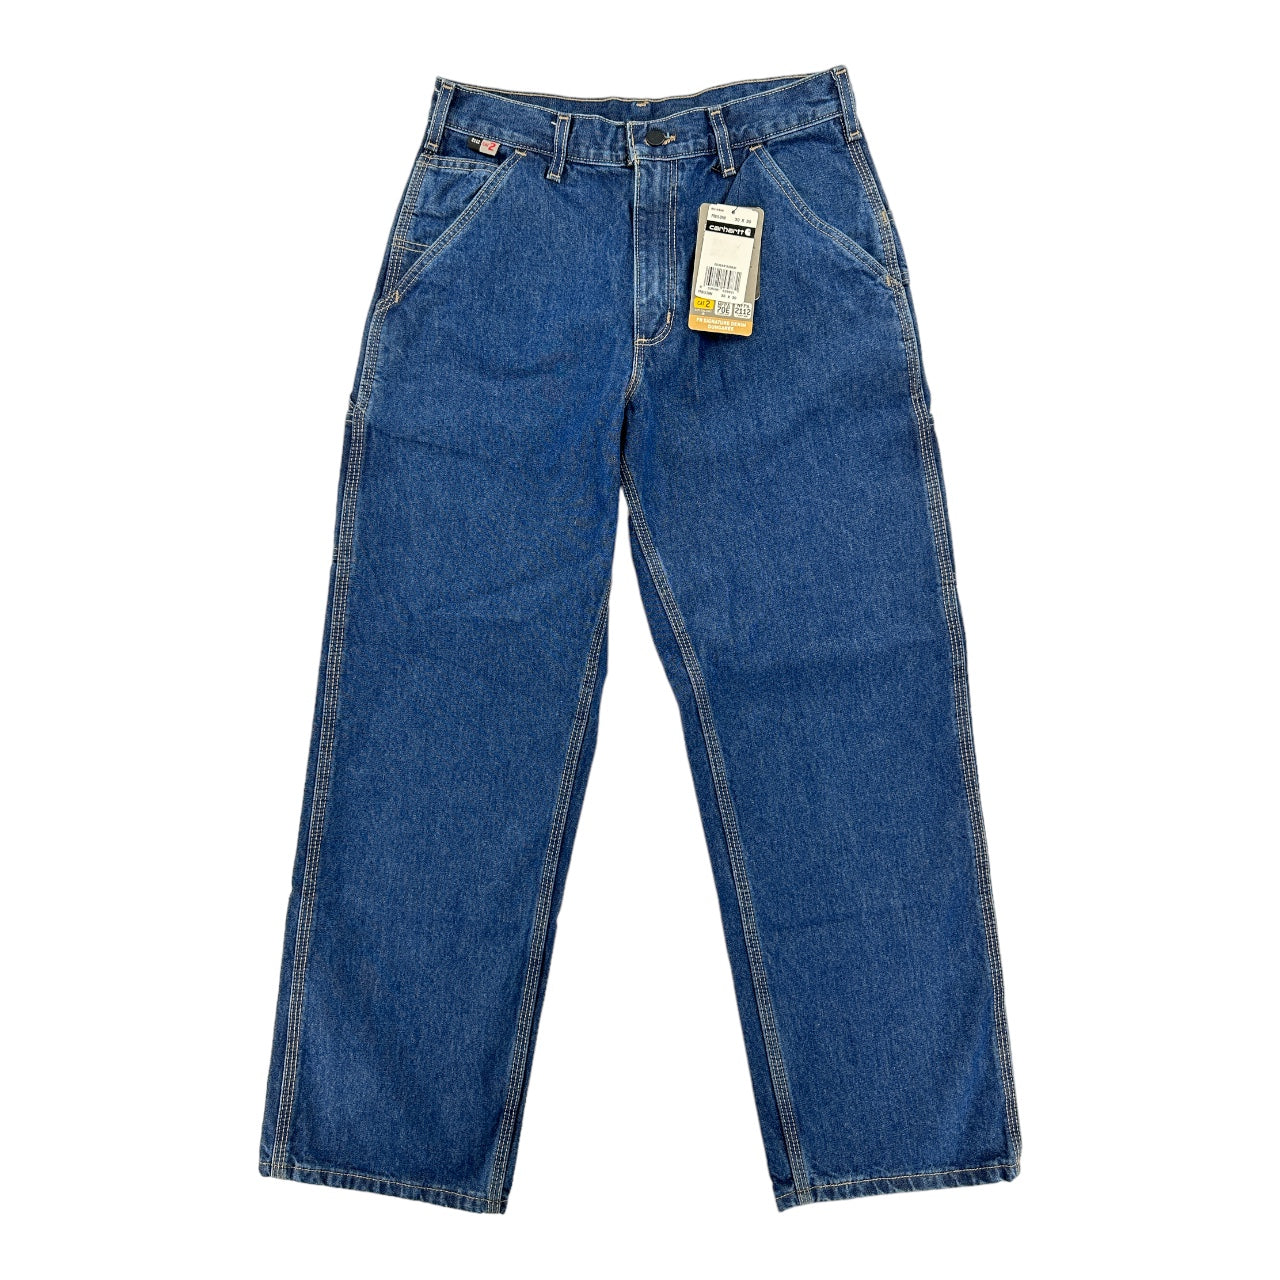 Carhartt FBR13-DNM Flame Resistant Carpenter Jeans - Men's 30x30-1